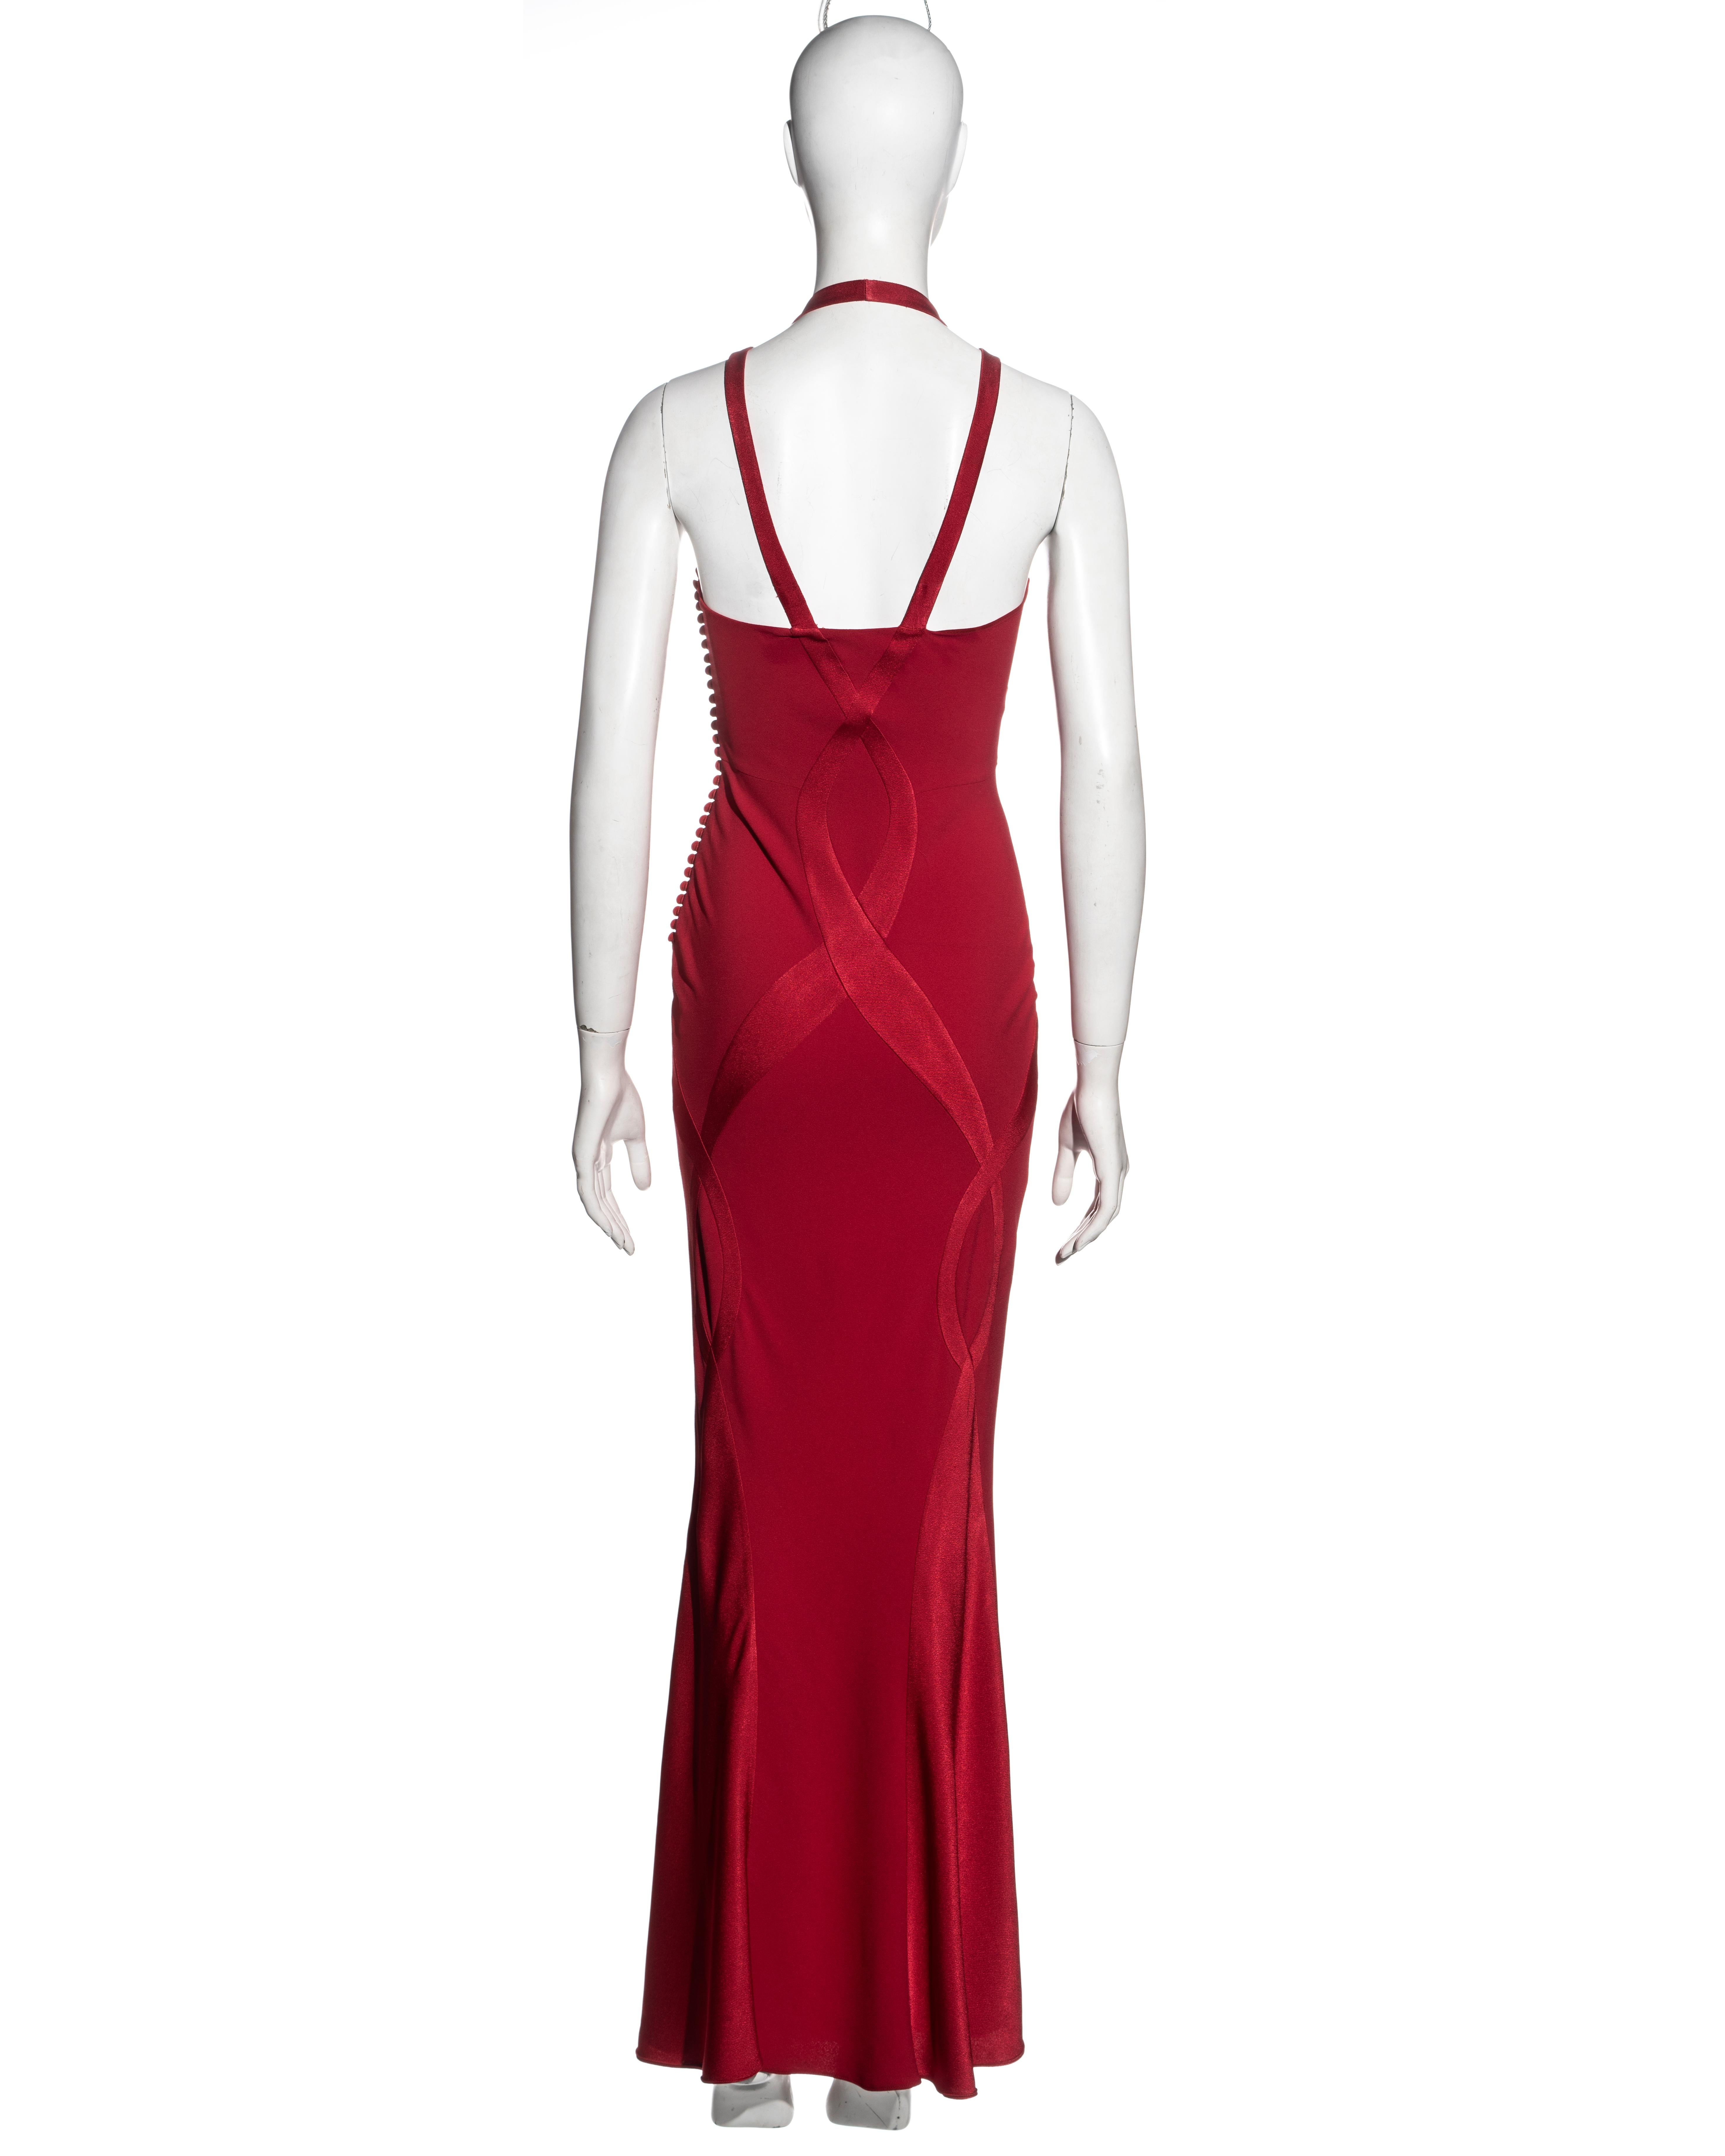 Christian Dior by John Galliano red bias-cut evening dress, fw 2004 1